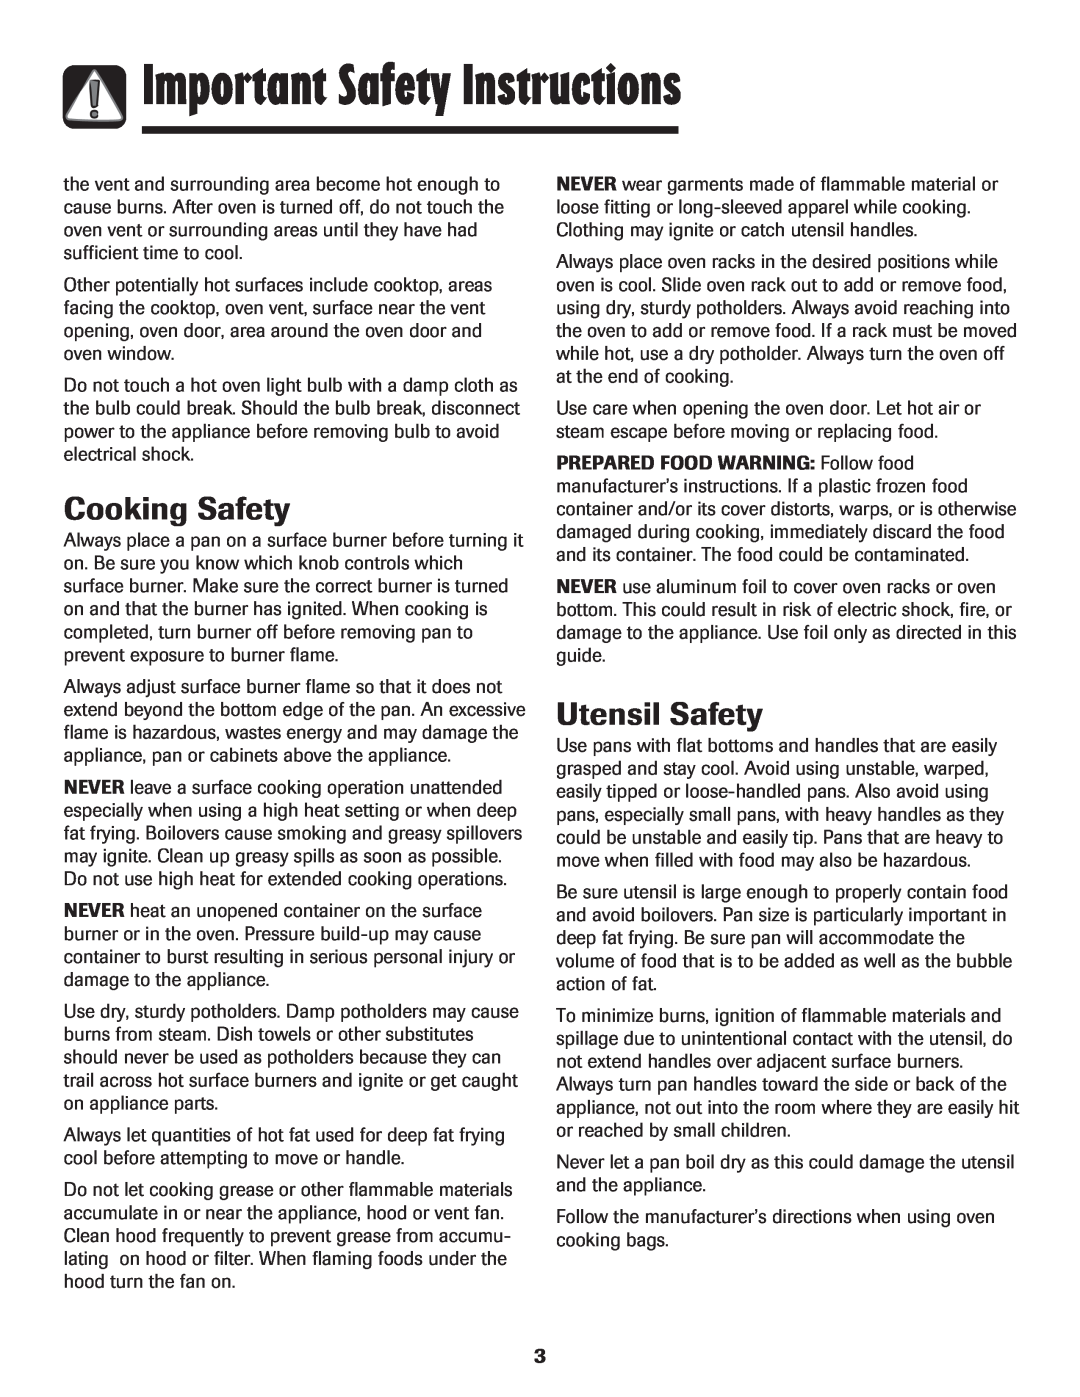 LG Electronics 800 important safety instructions Cooking Safety, Utensil Safety, Important Safety Instructions 